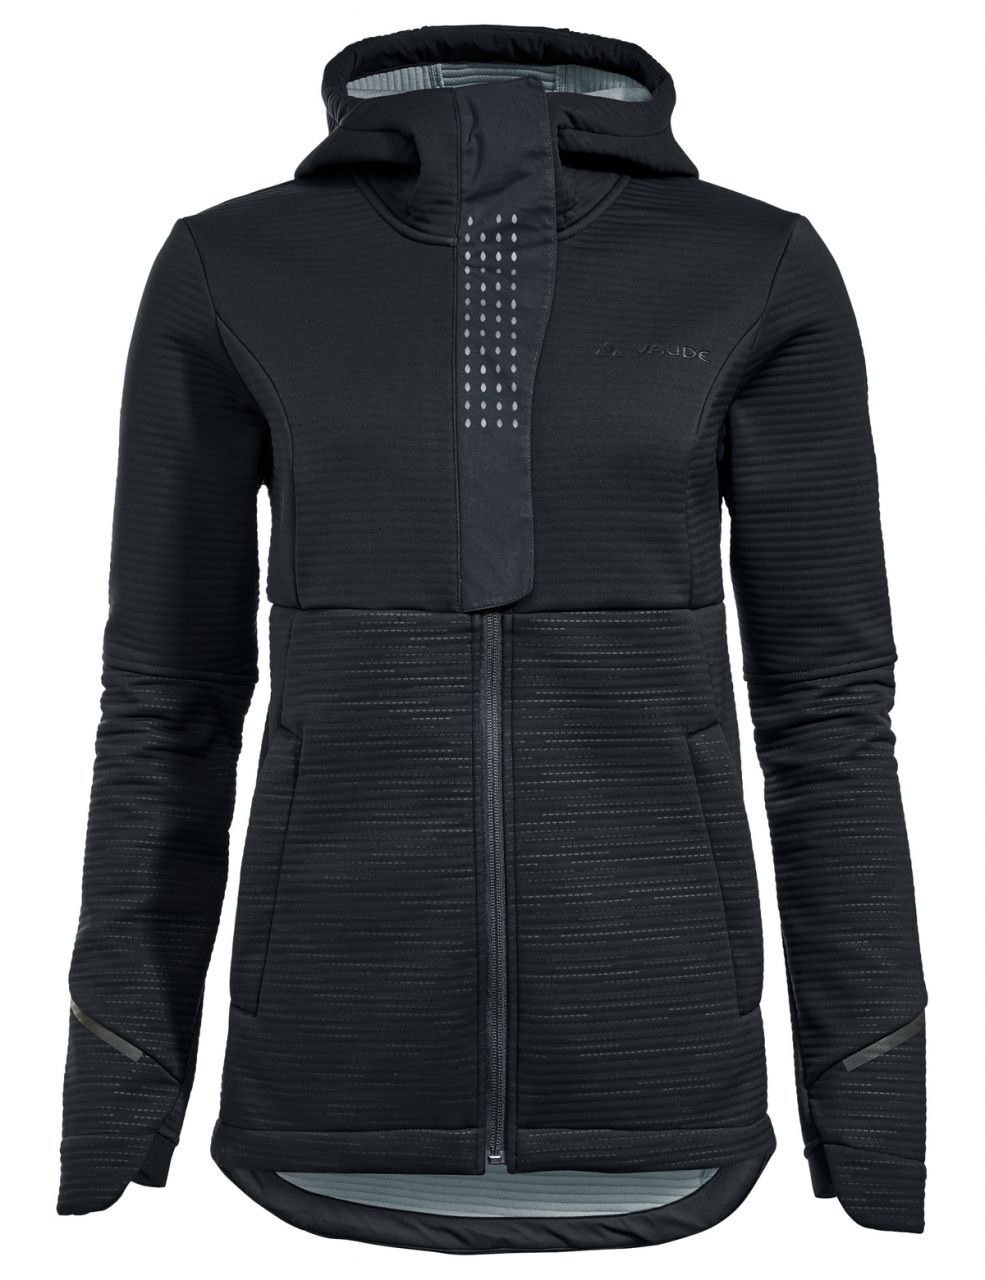 Vaude Cyclist Winter Softshell Jacket - Softshell jacket - Women's